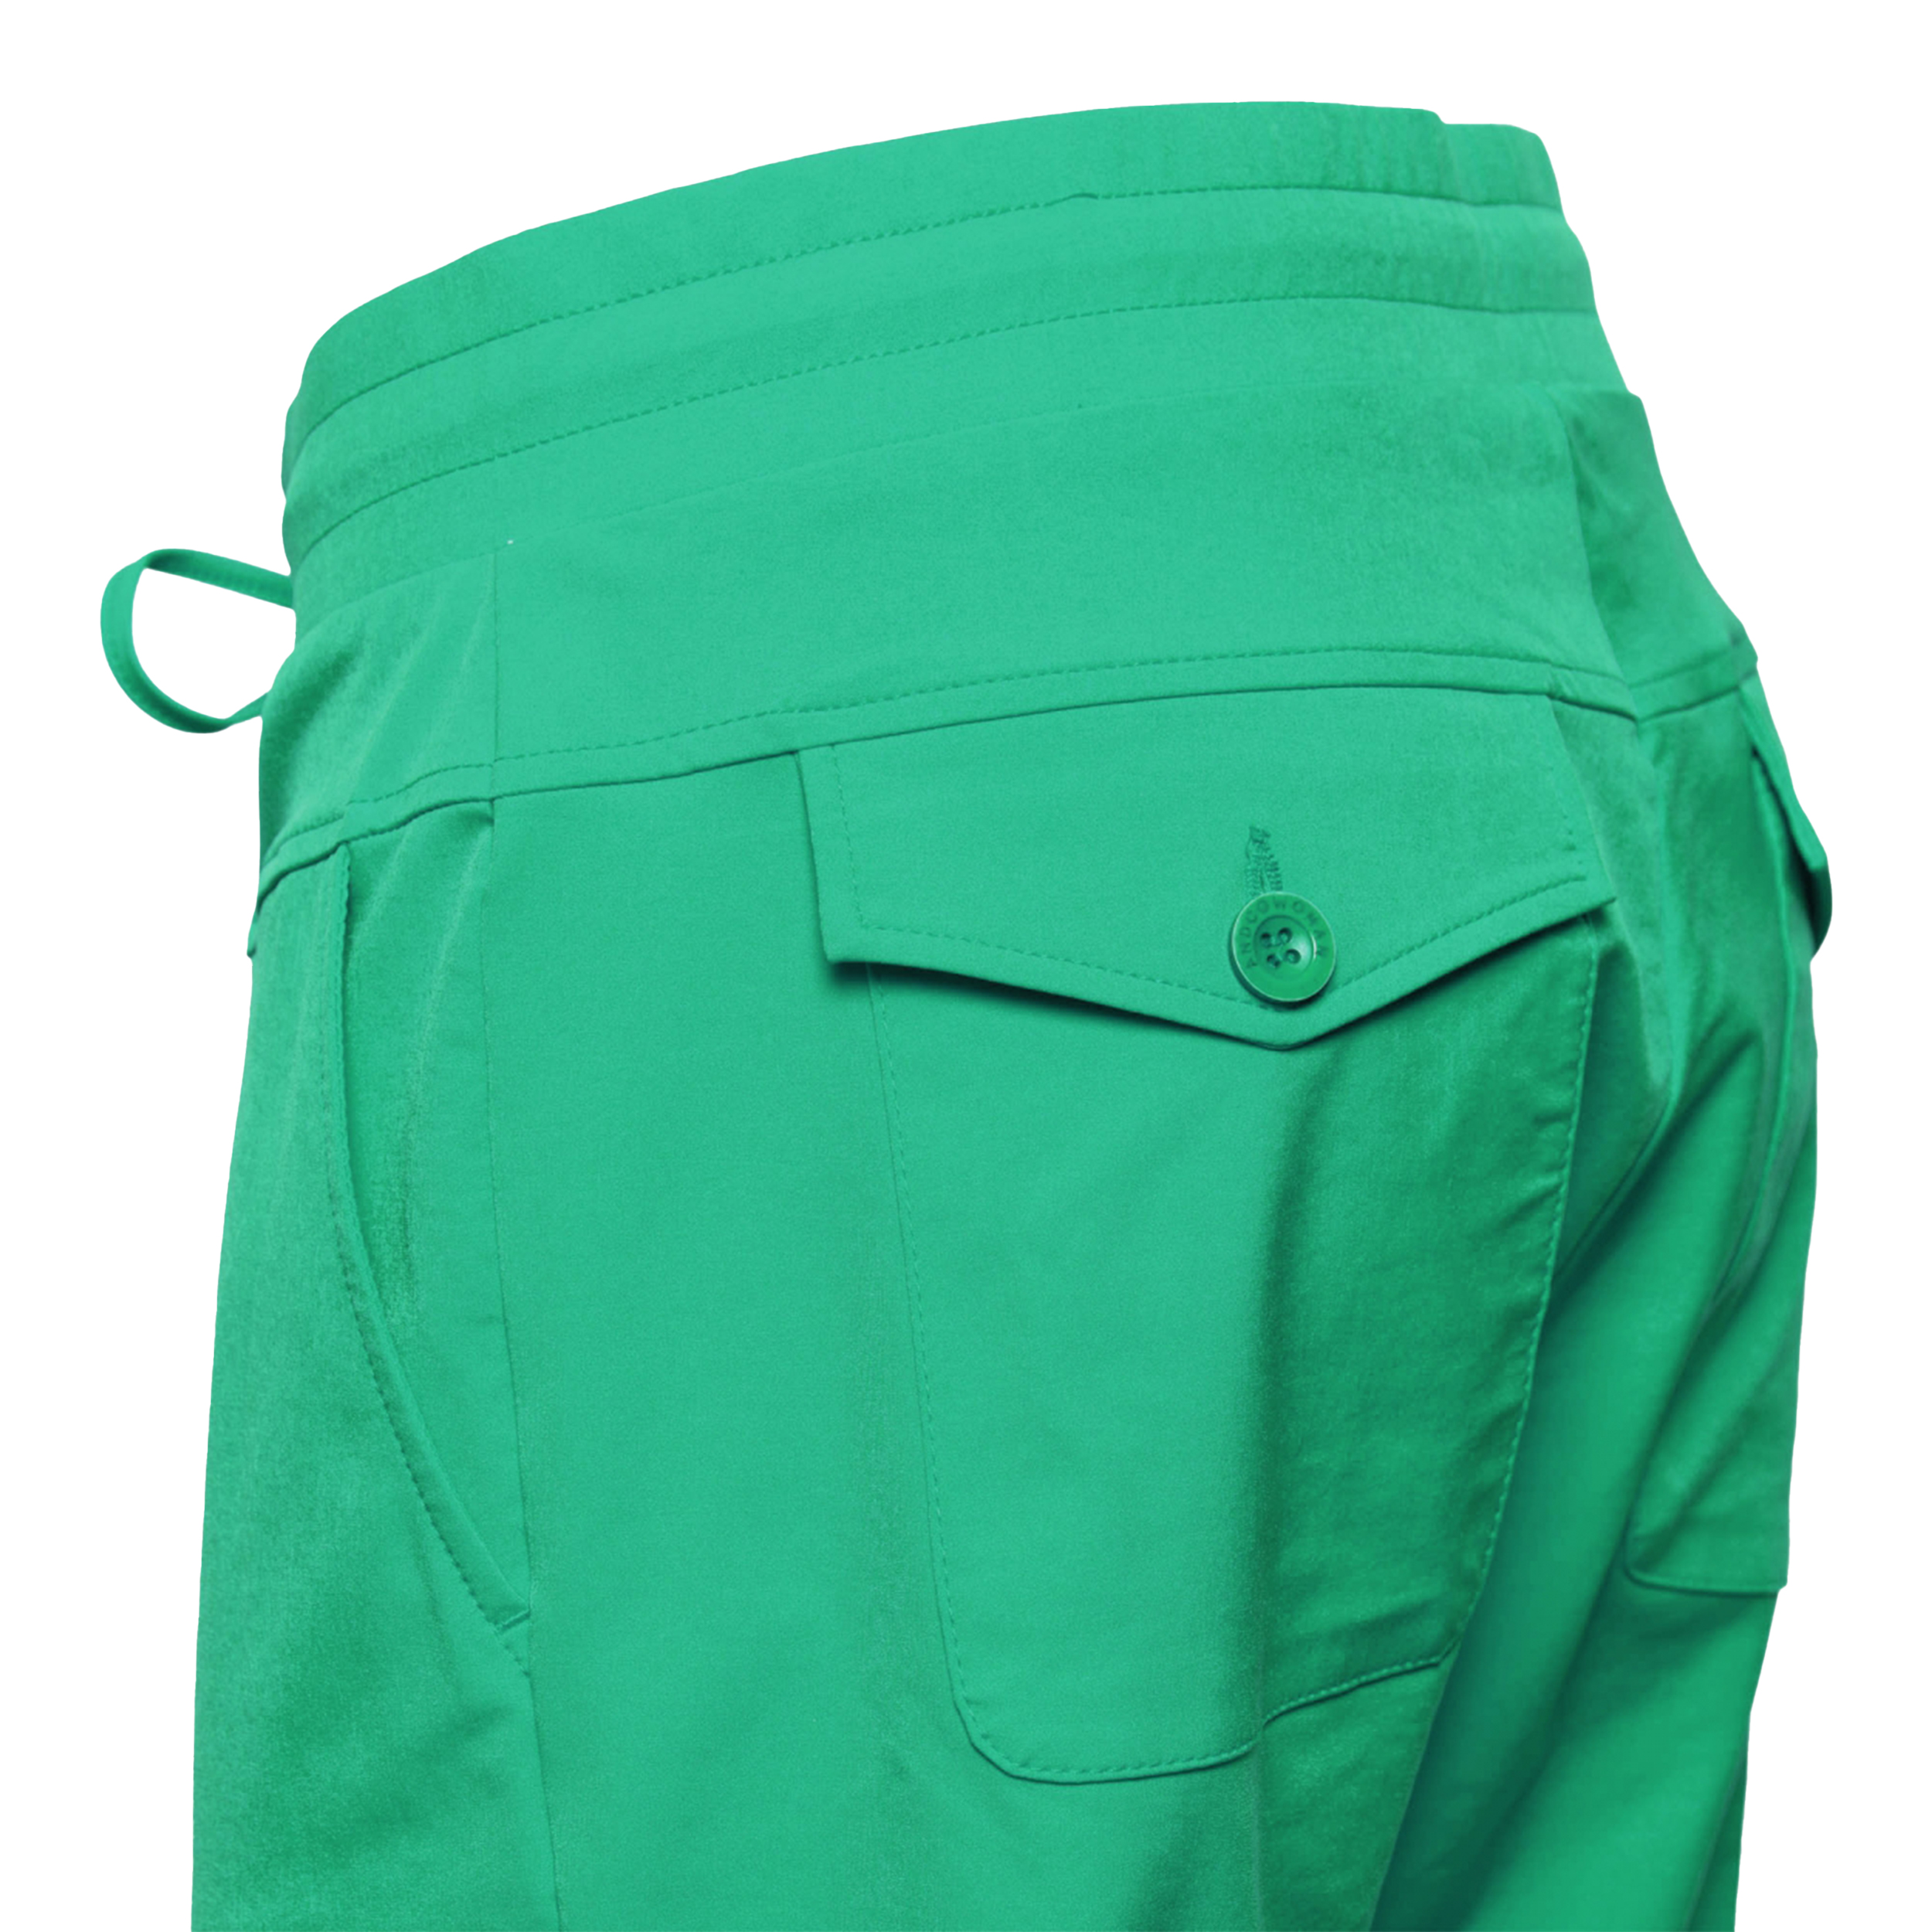 &Co Penny Travel Pants Green